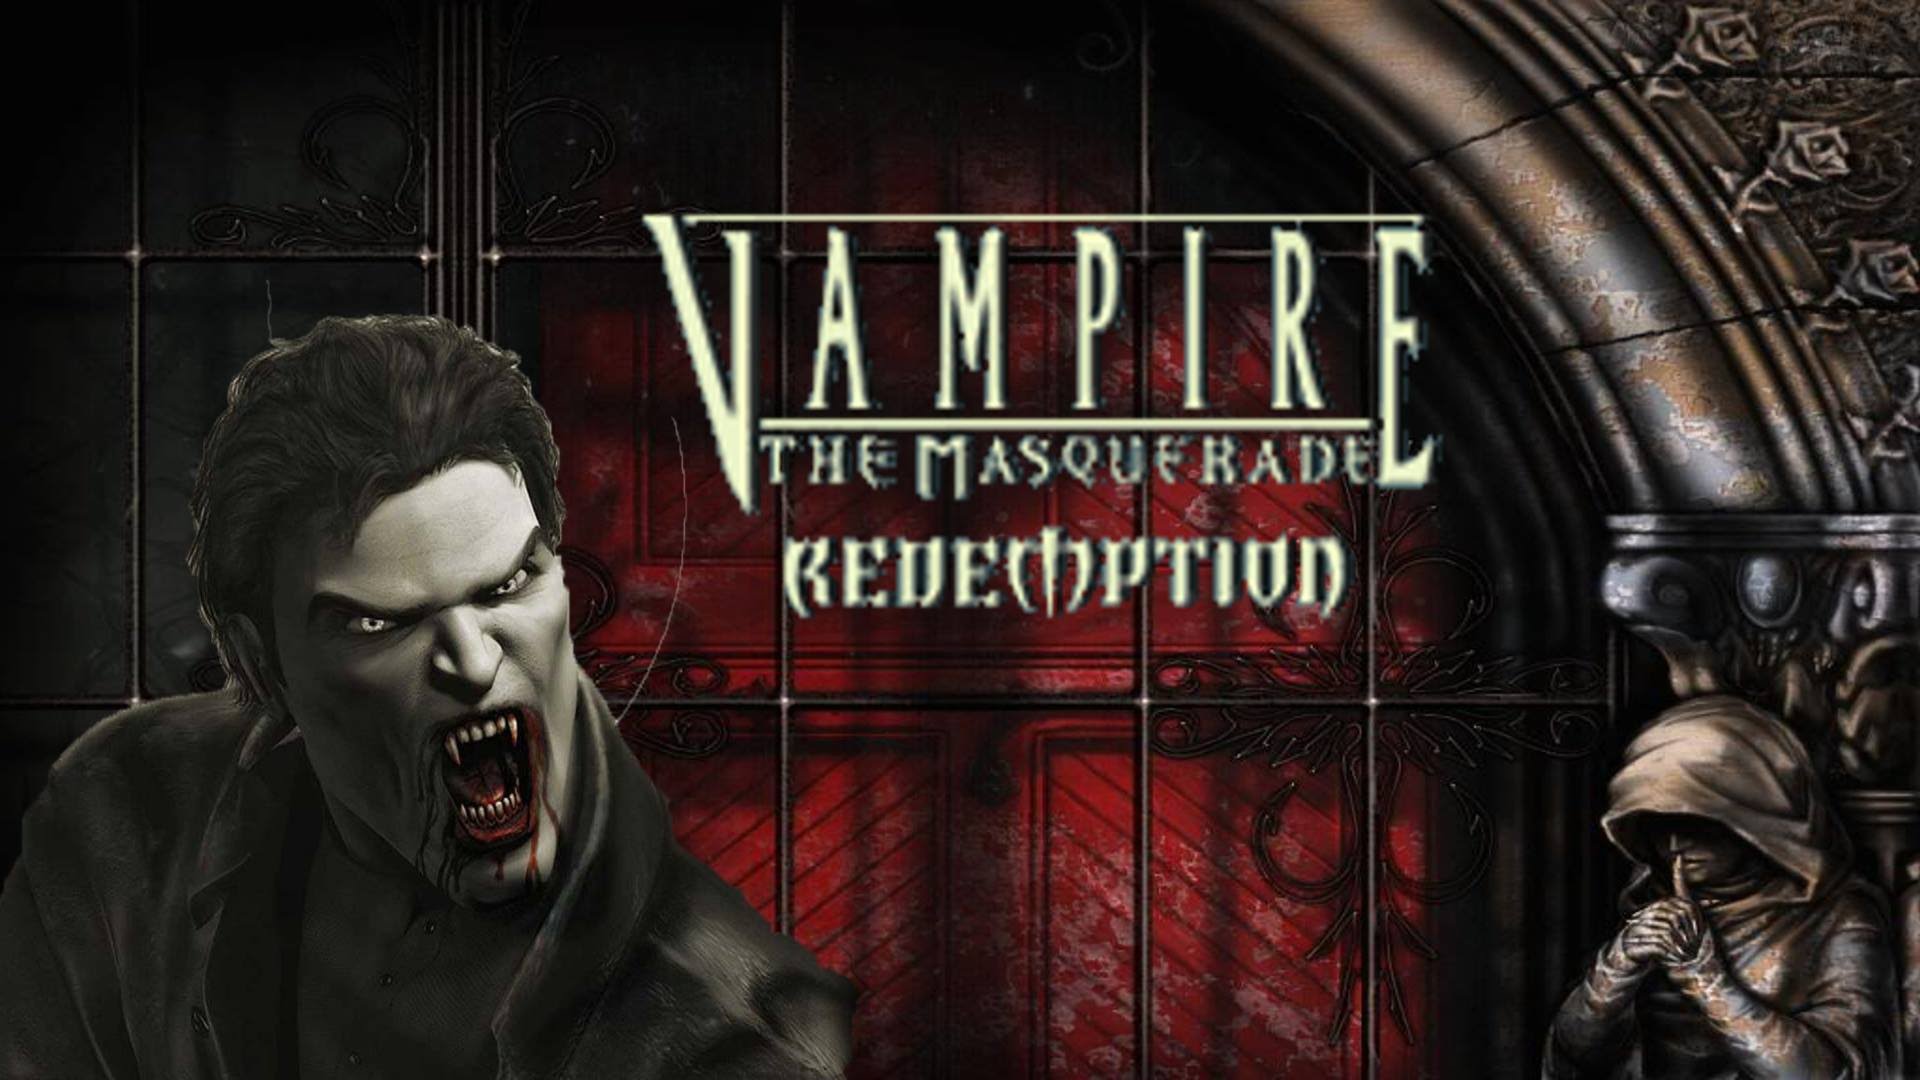 Vampire: The Masquerade – Redemption Soundtrack